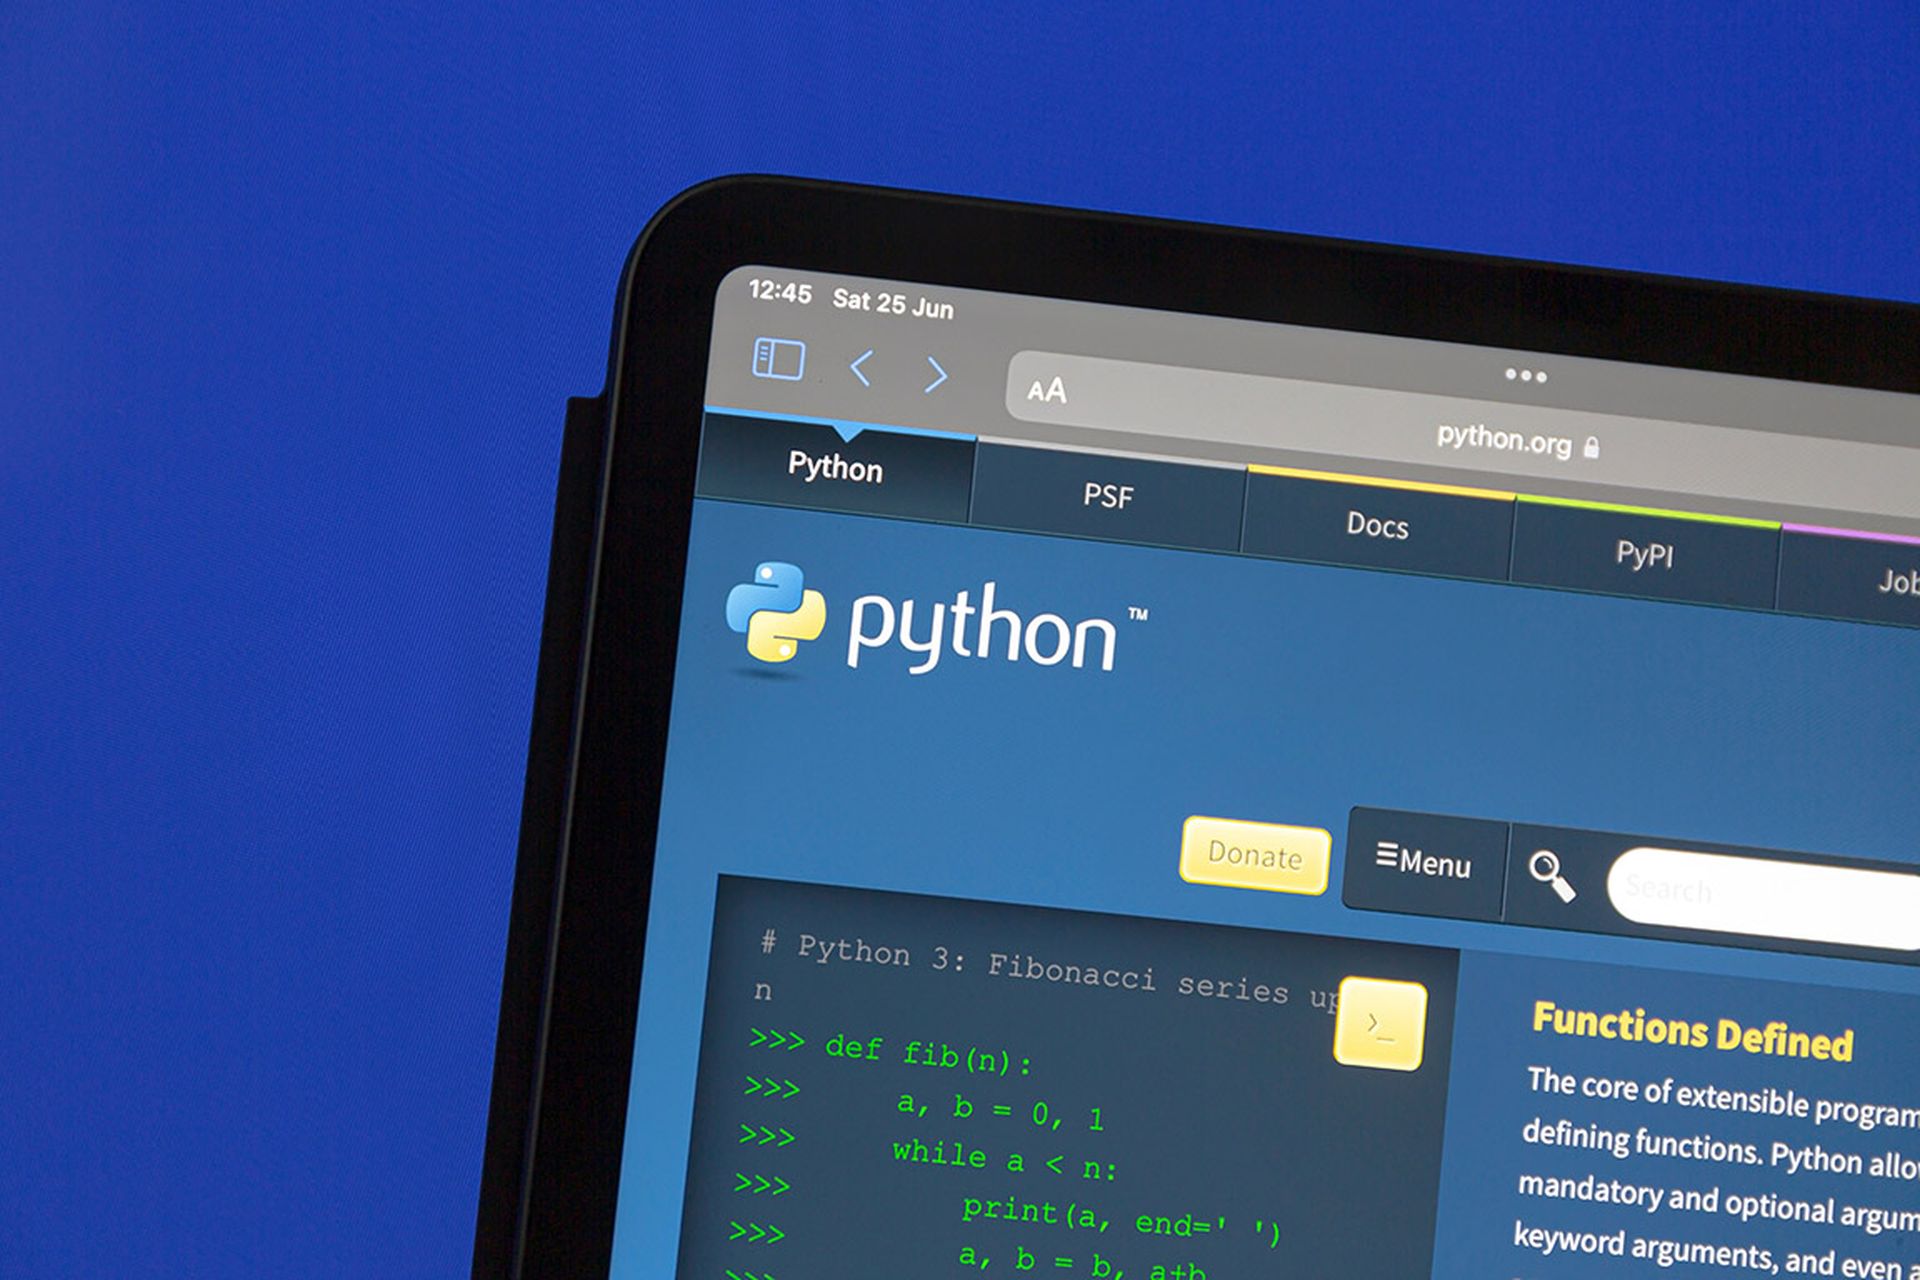 Python website. Python is a high-level, interpreted, general-purpose programming language.